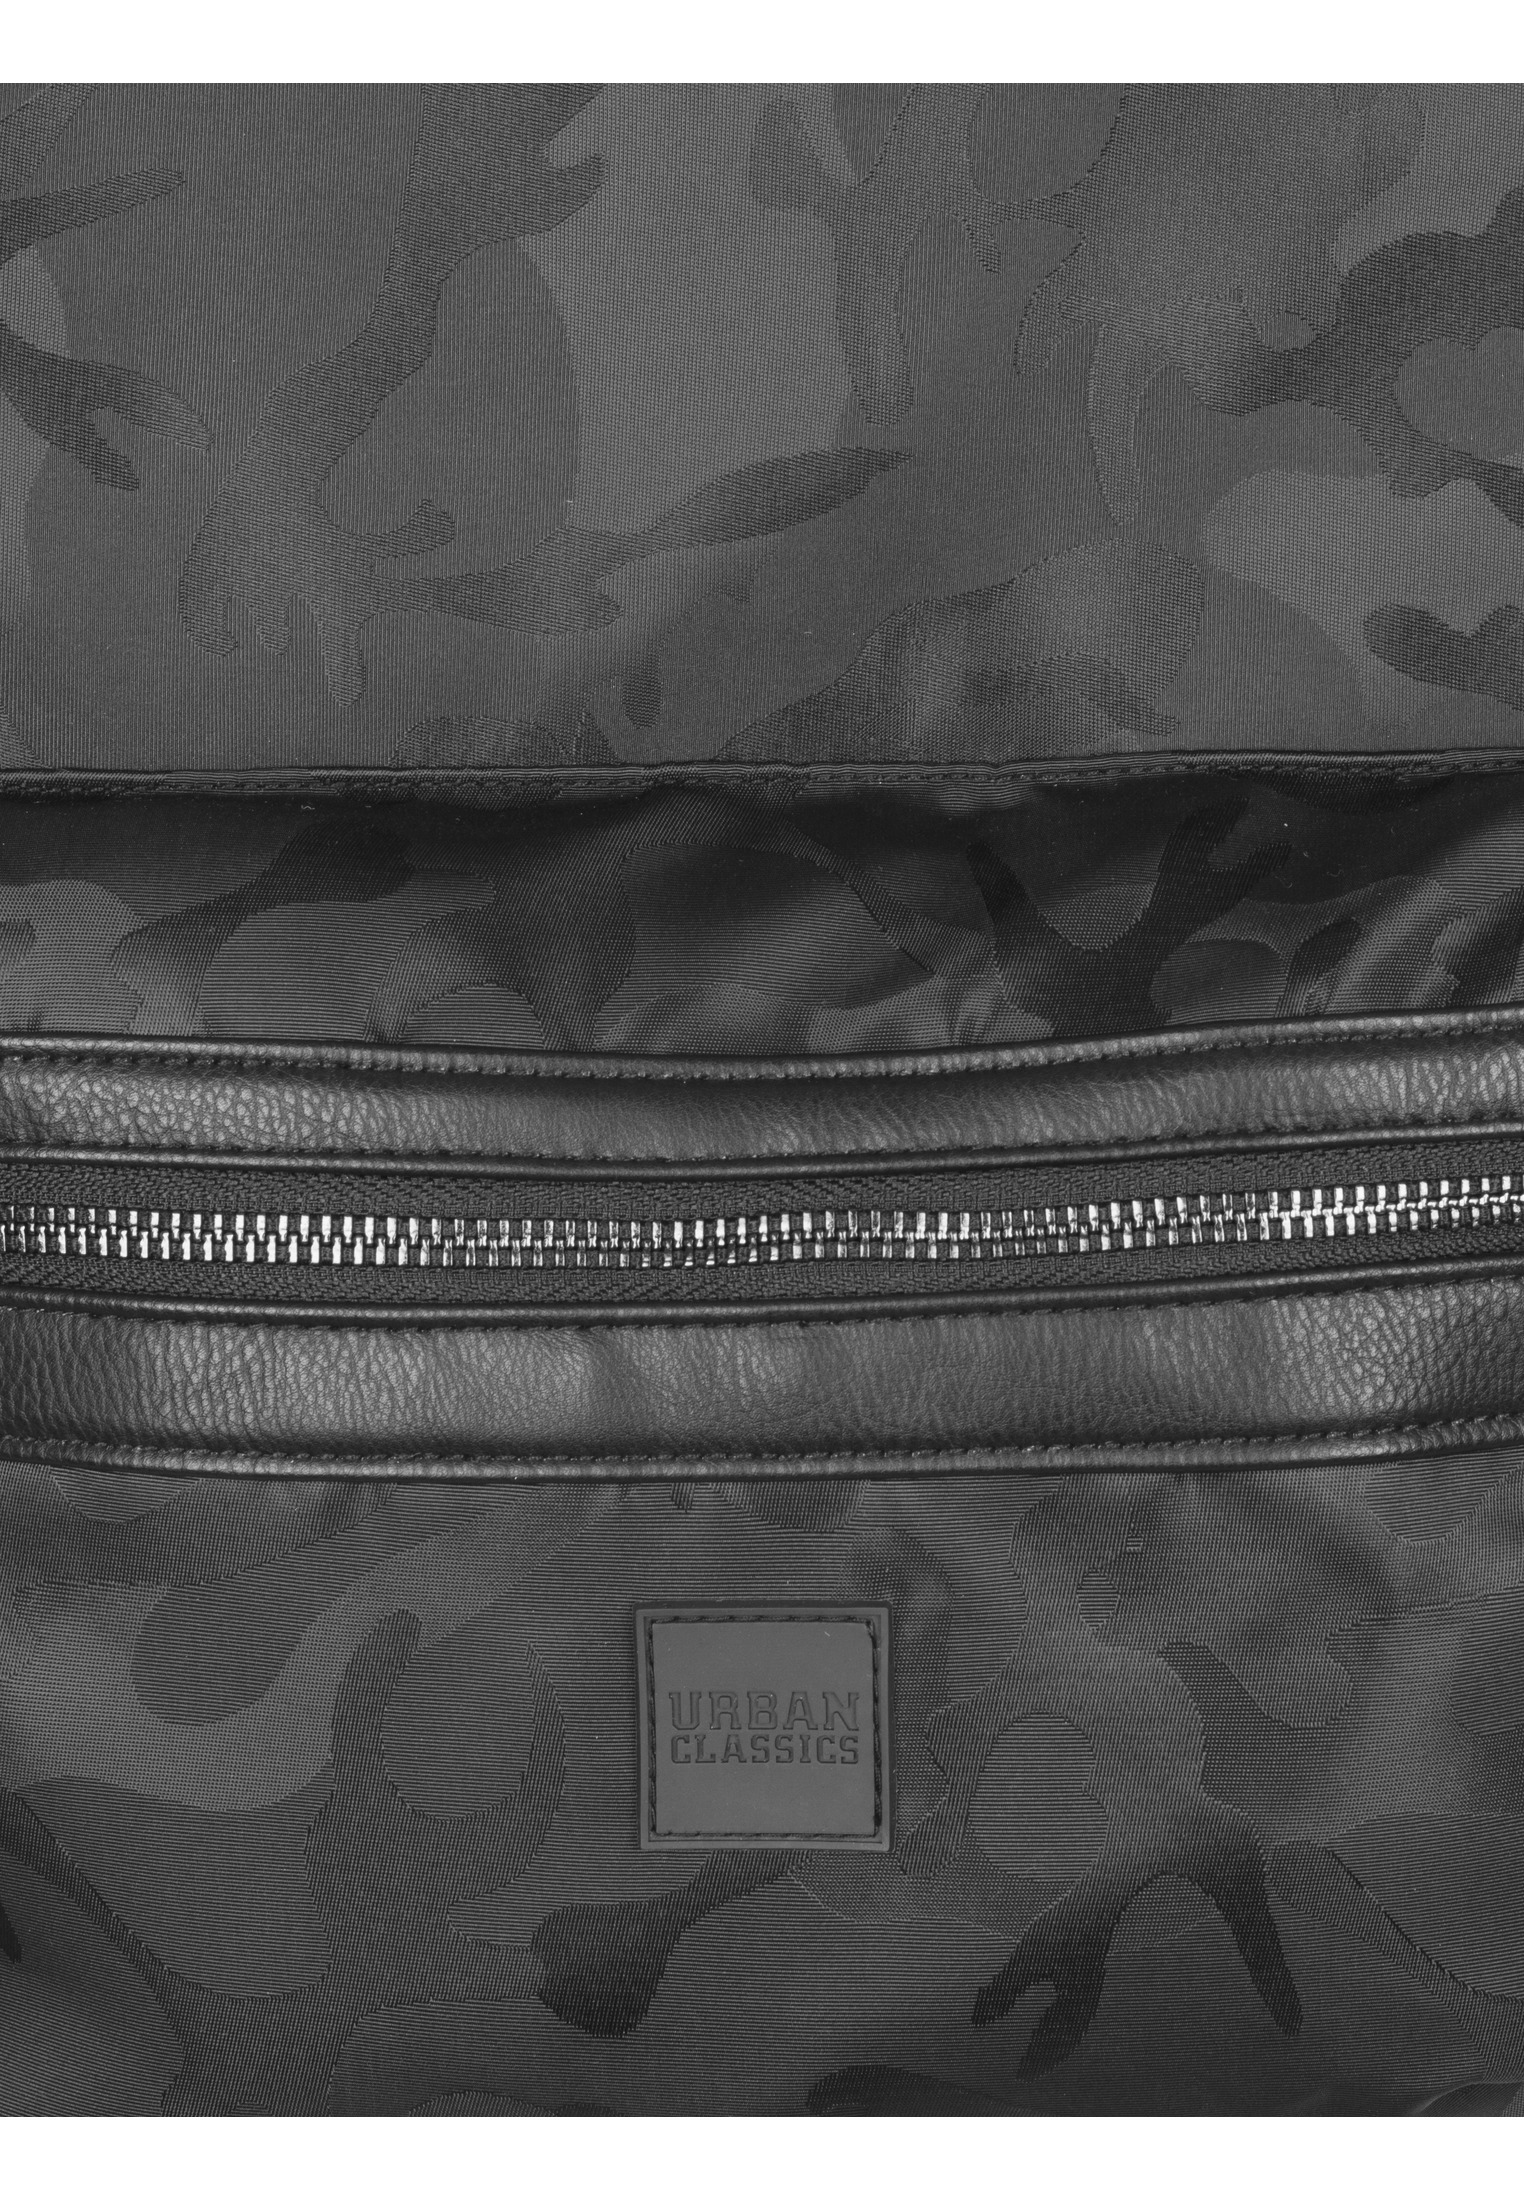 Taschen Camo Jacquard Backpack in Farbe black camo